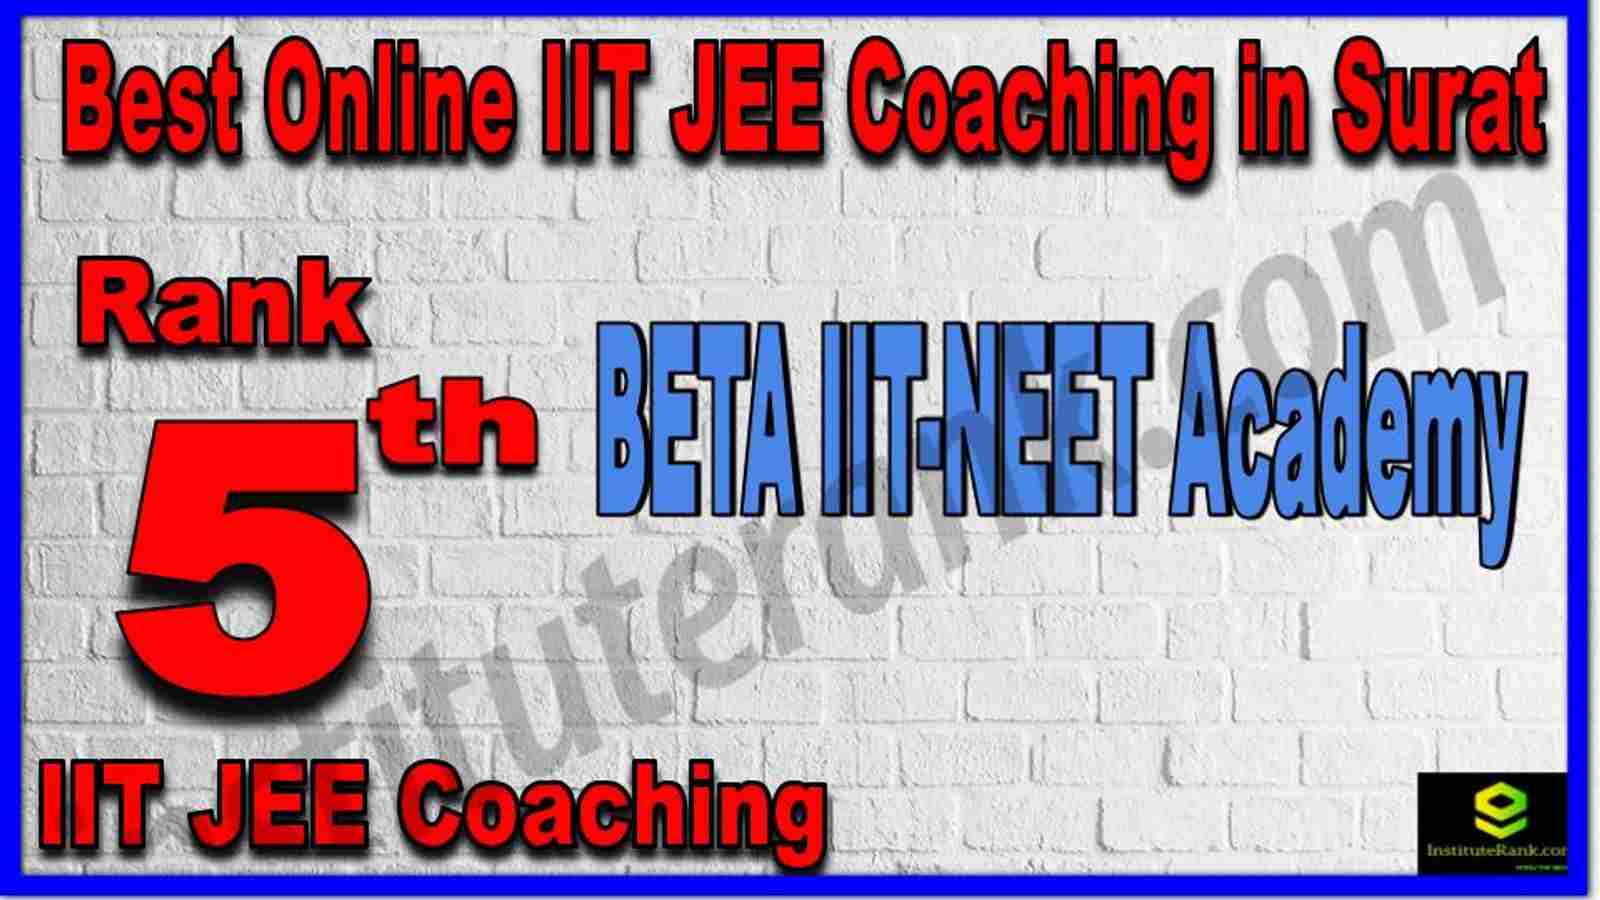 Rank 5th Best Online IIT JEE Coaching in Surat